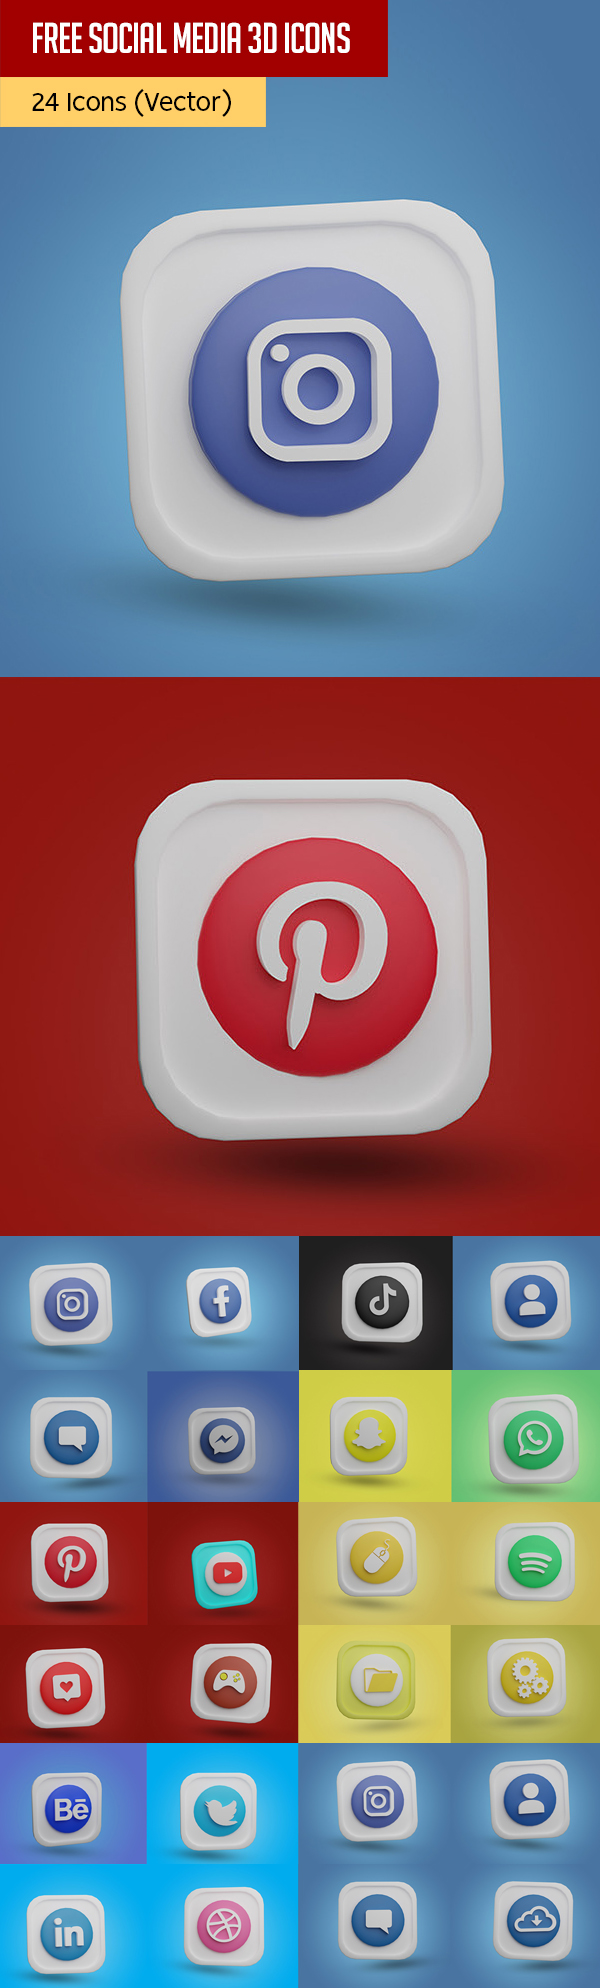 Social media 3D Icons Download Free